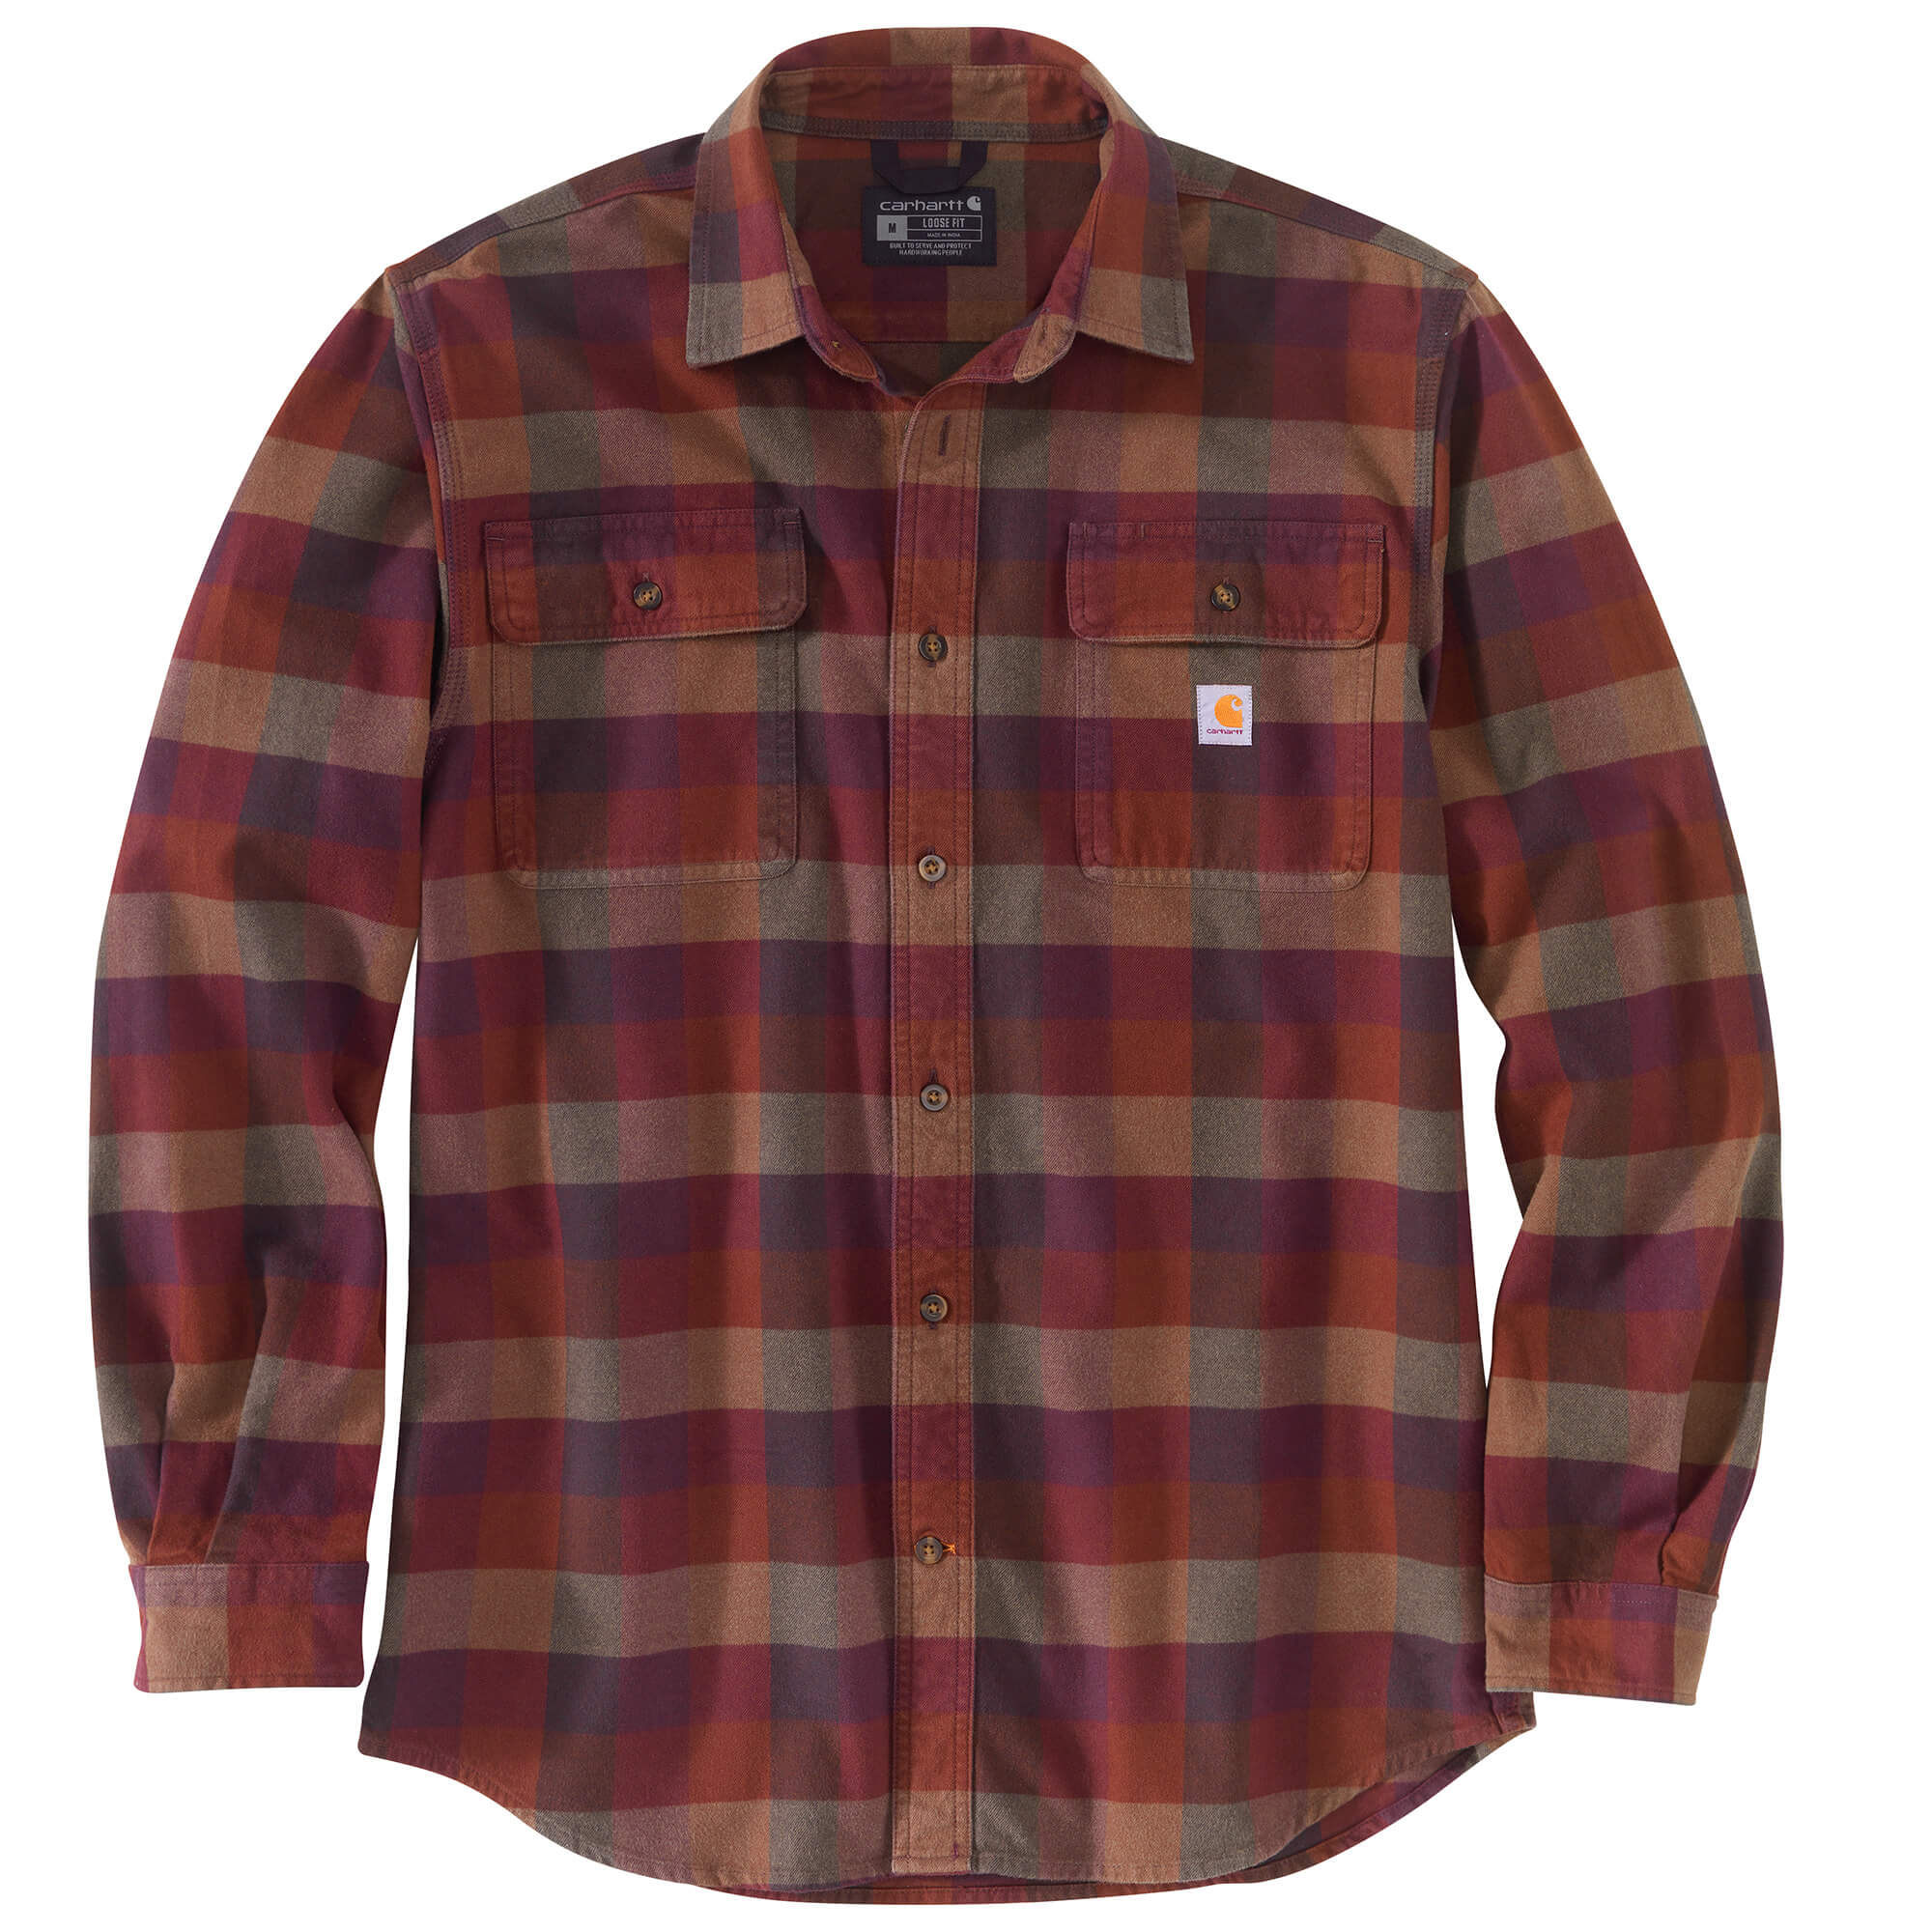 105078 - Loose Fit Heavyweight Flannel Long-Sleeve Plaid Shirt  2XL REG